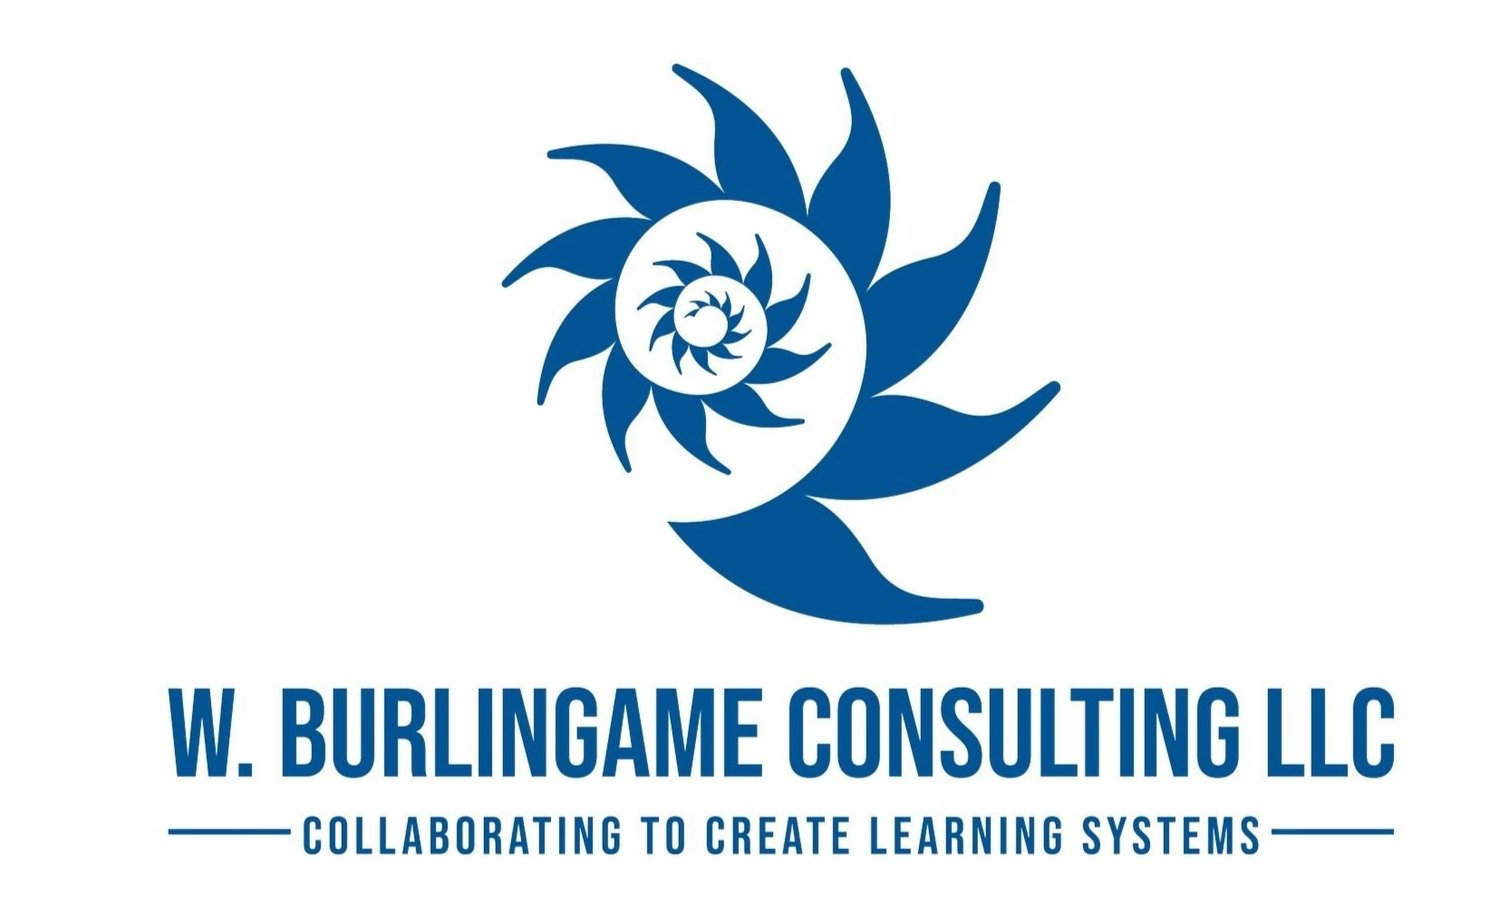 W. Burlingame Consulting LLC